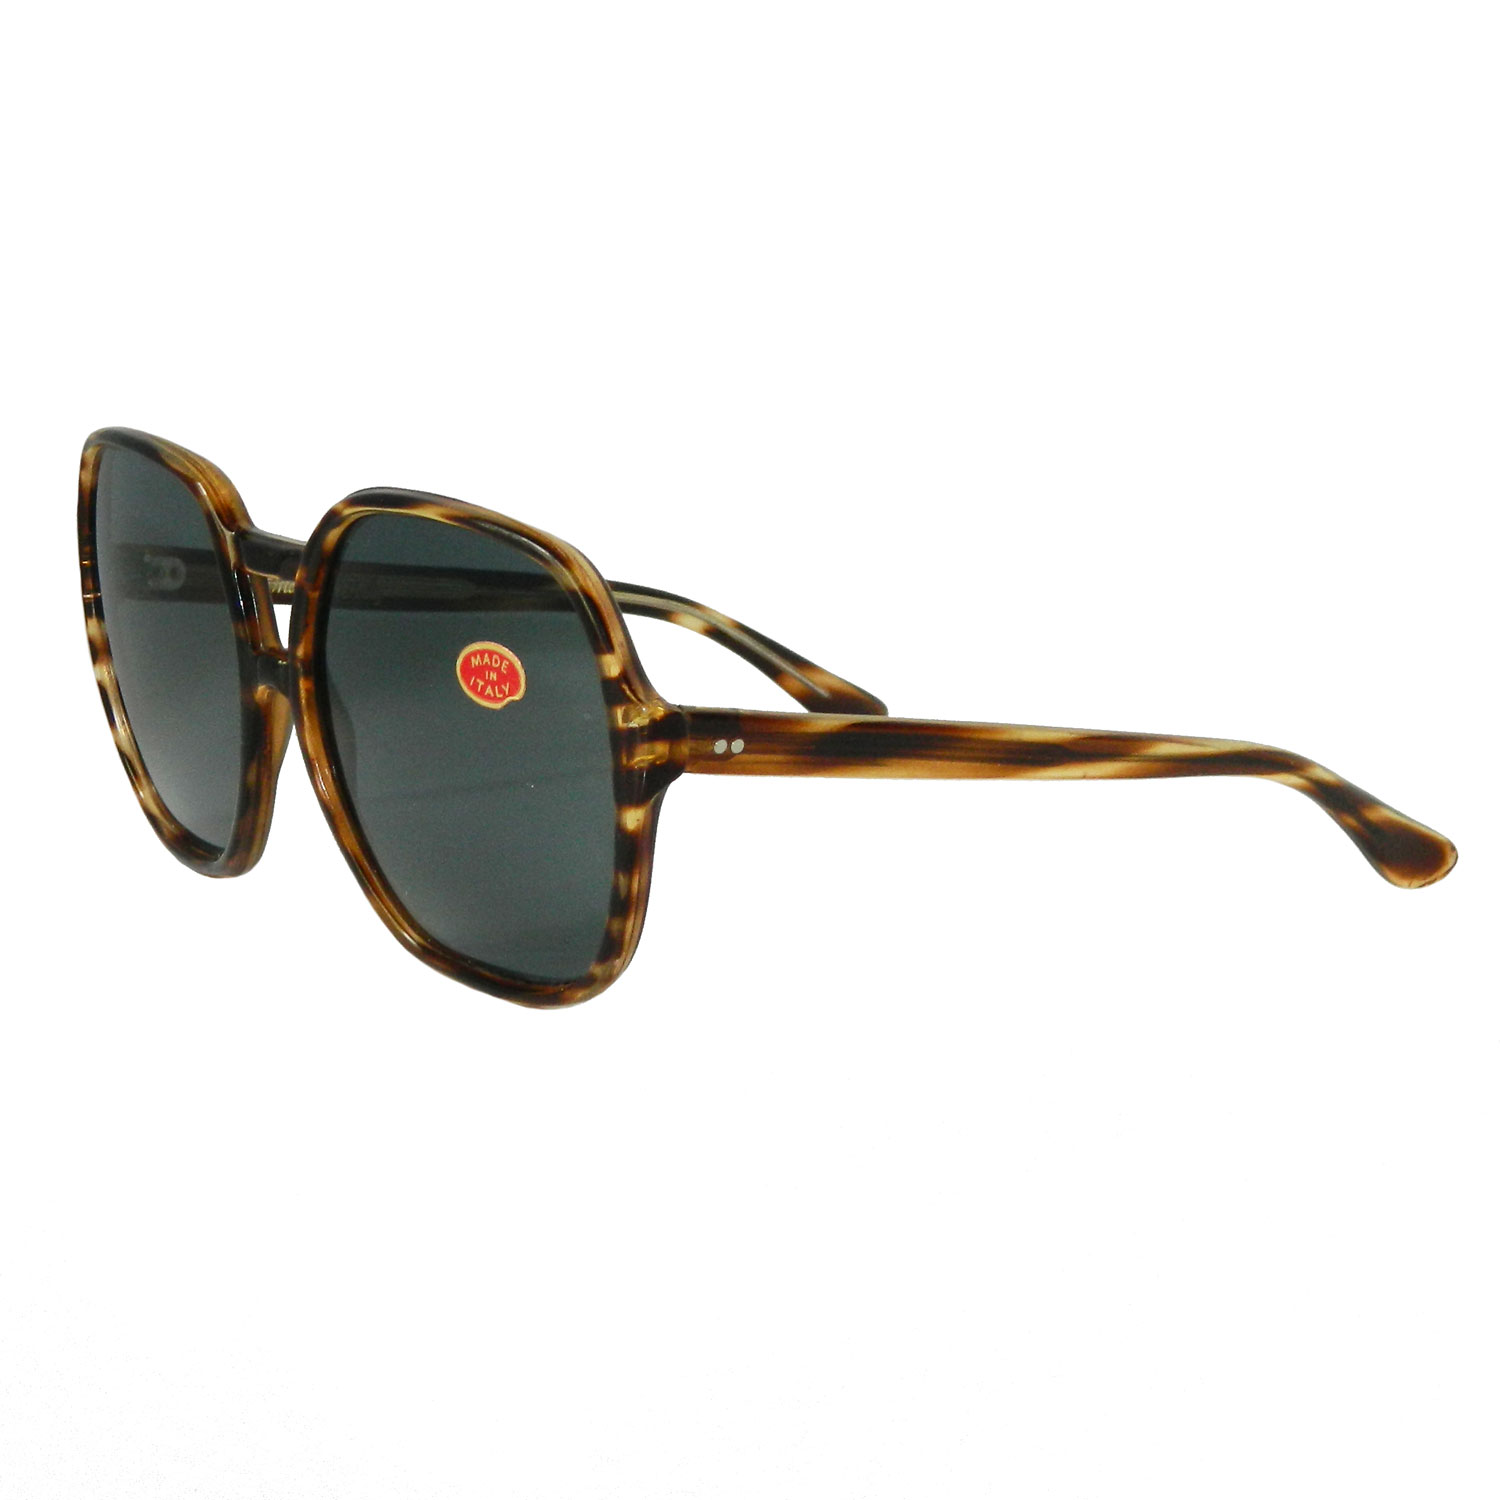 1970s oversize Italian sunglasses